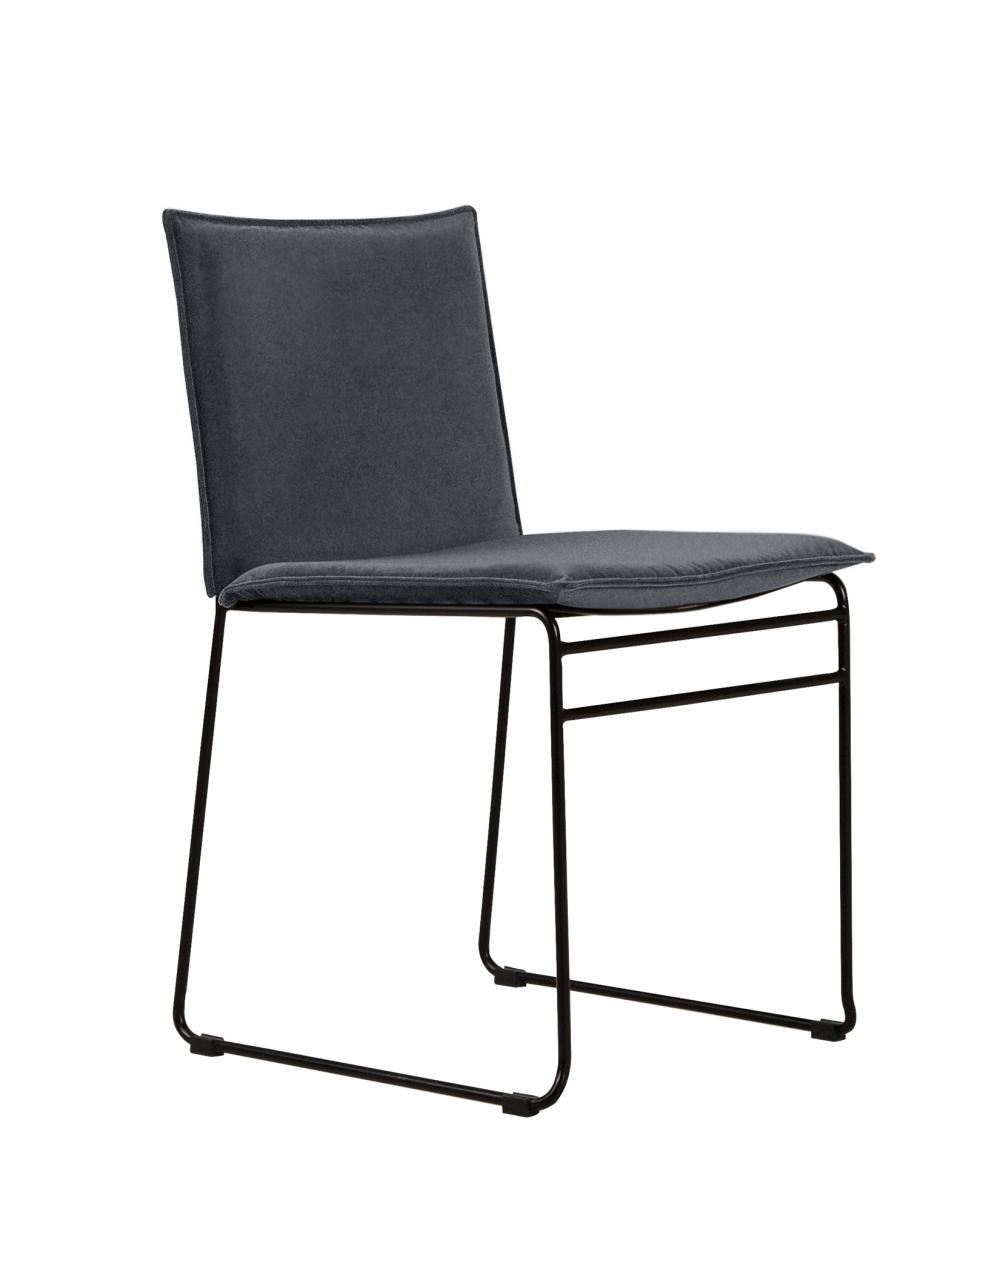 Kyst Dining Chair Outdoor White Steel Chair Dark Grey